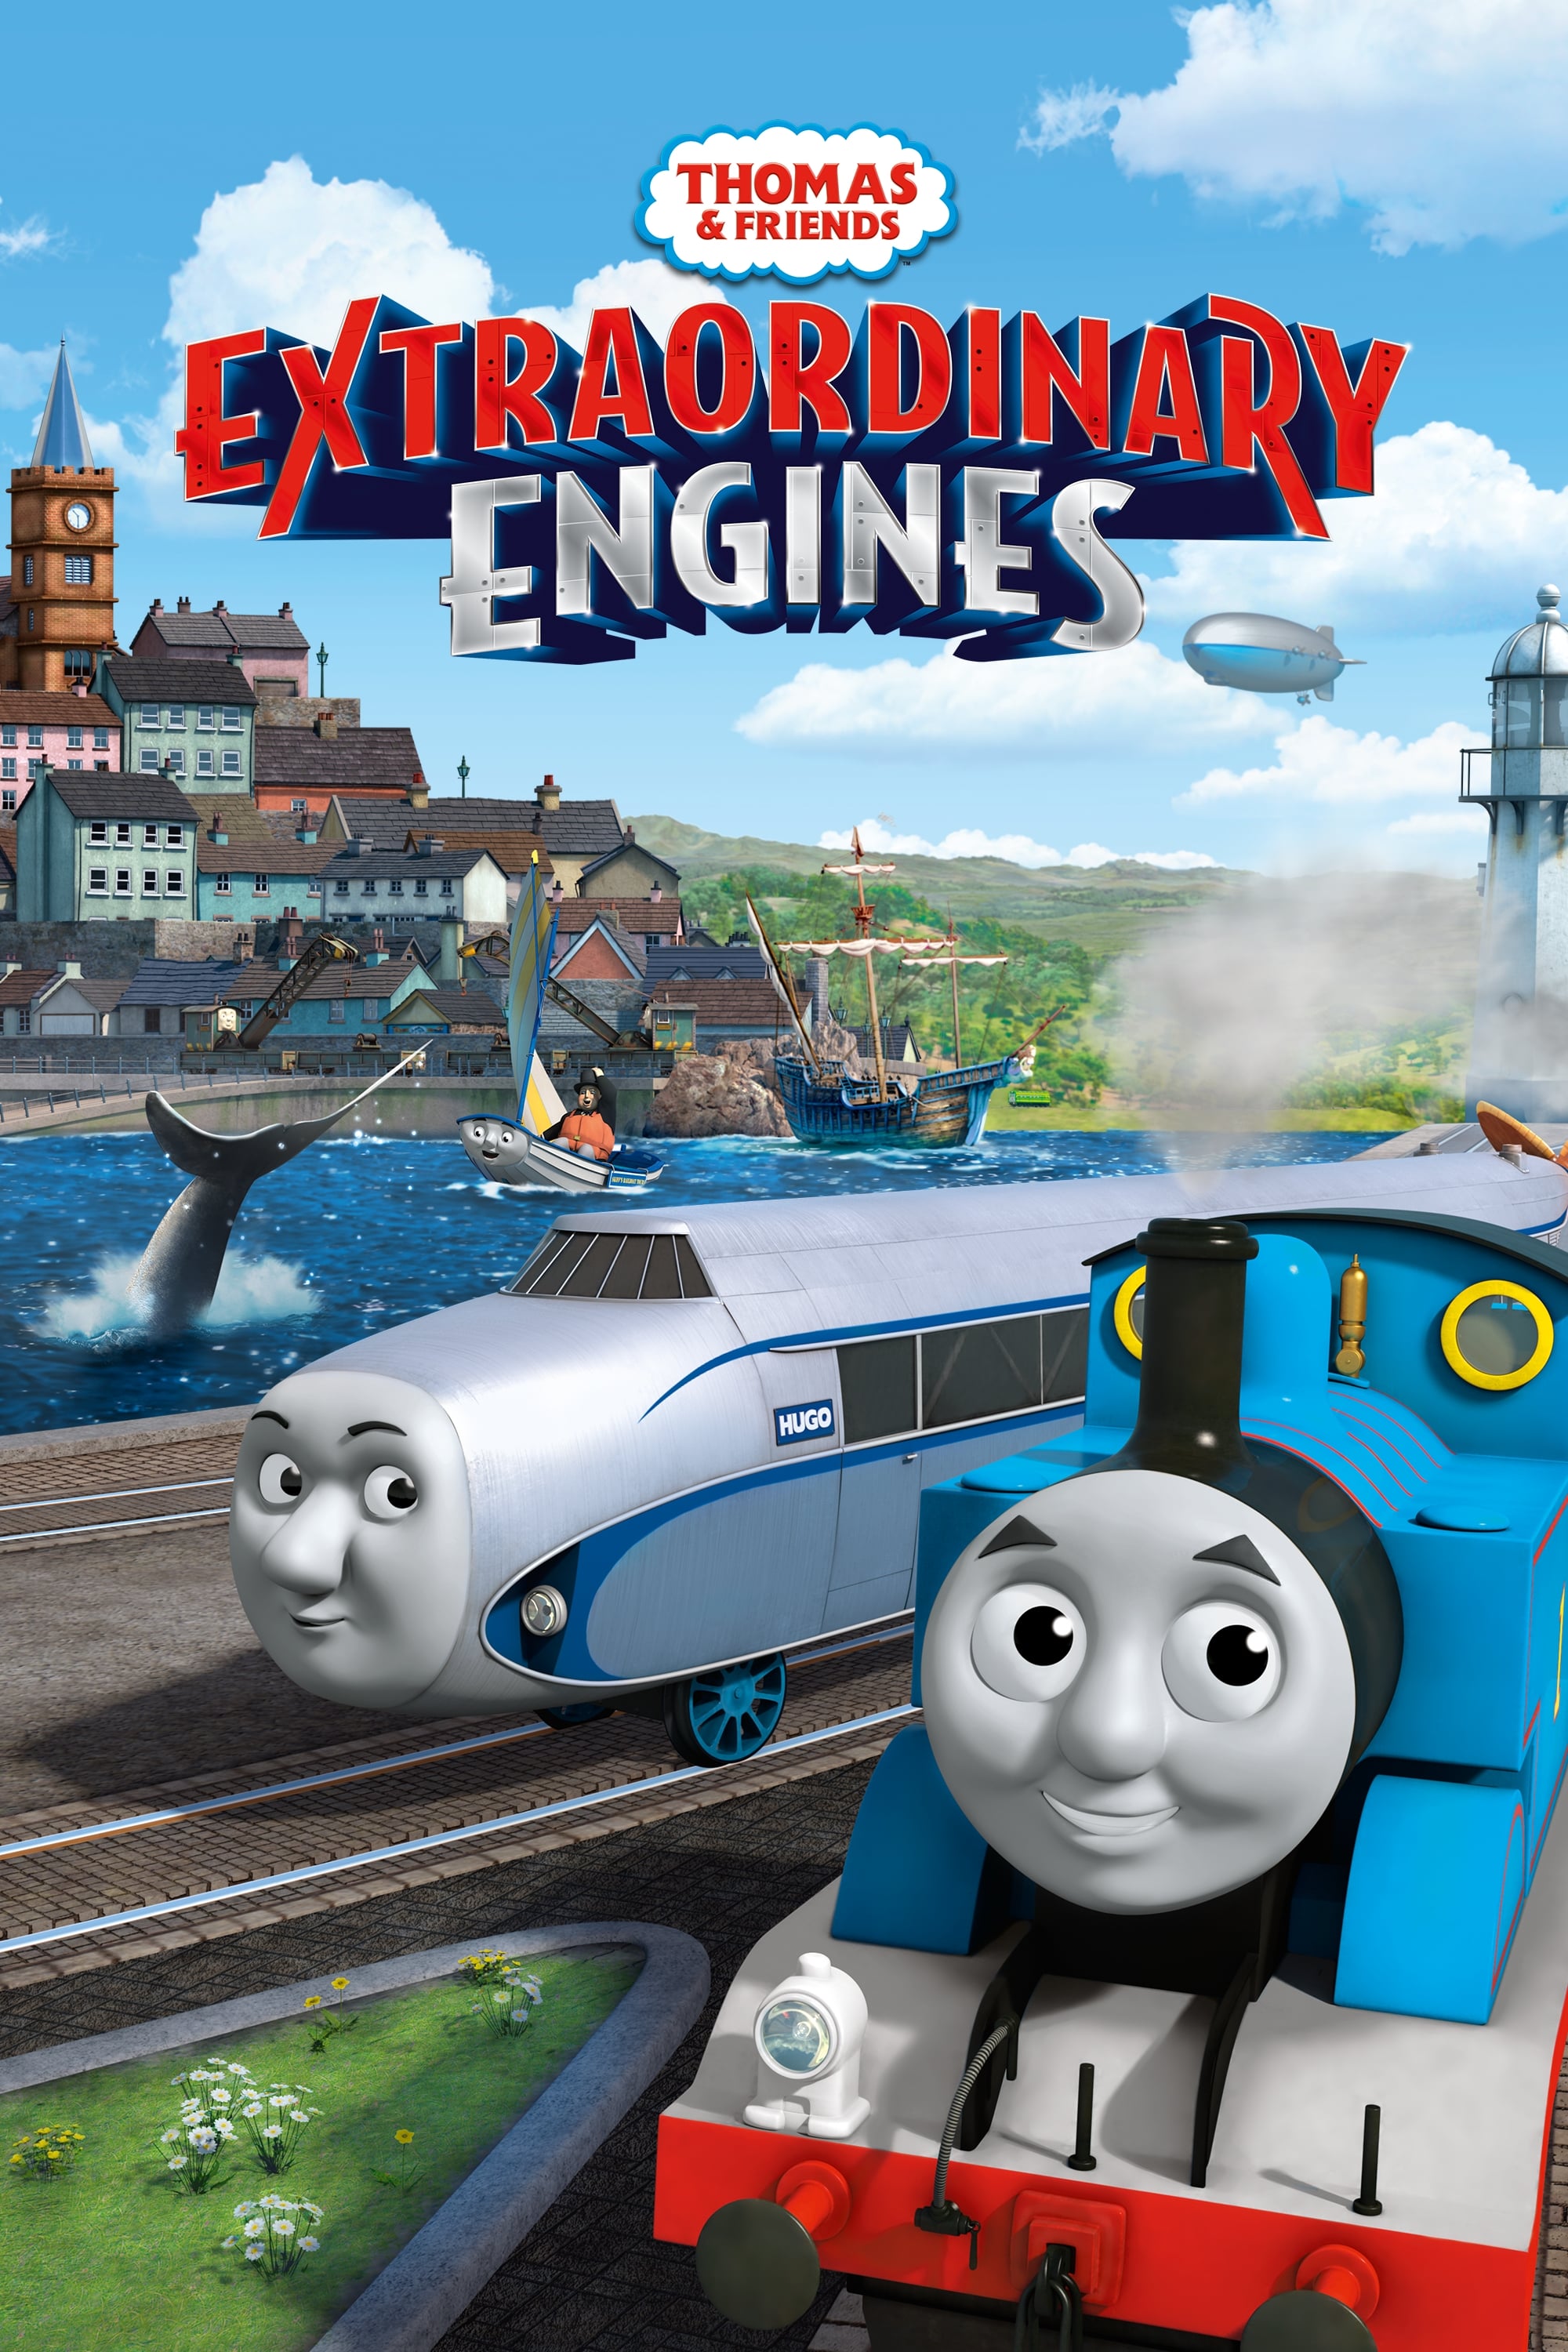 Thomas & Friends: Extraordinary Engines film